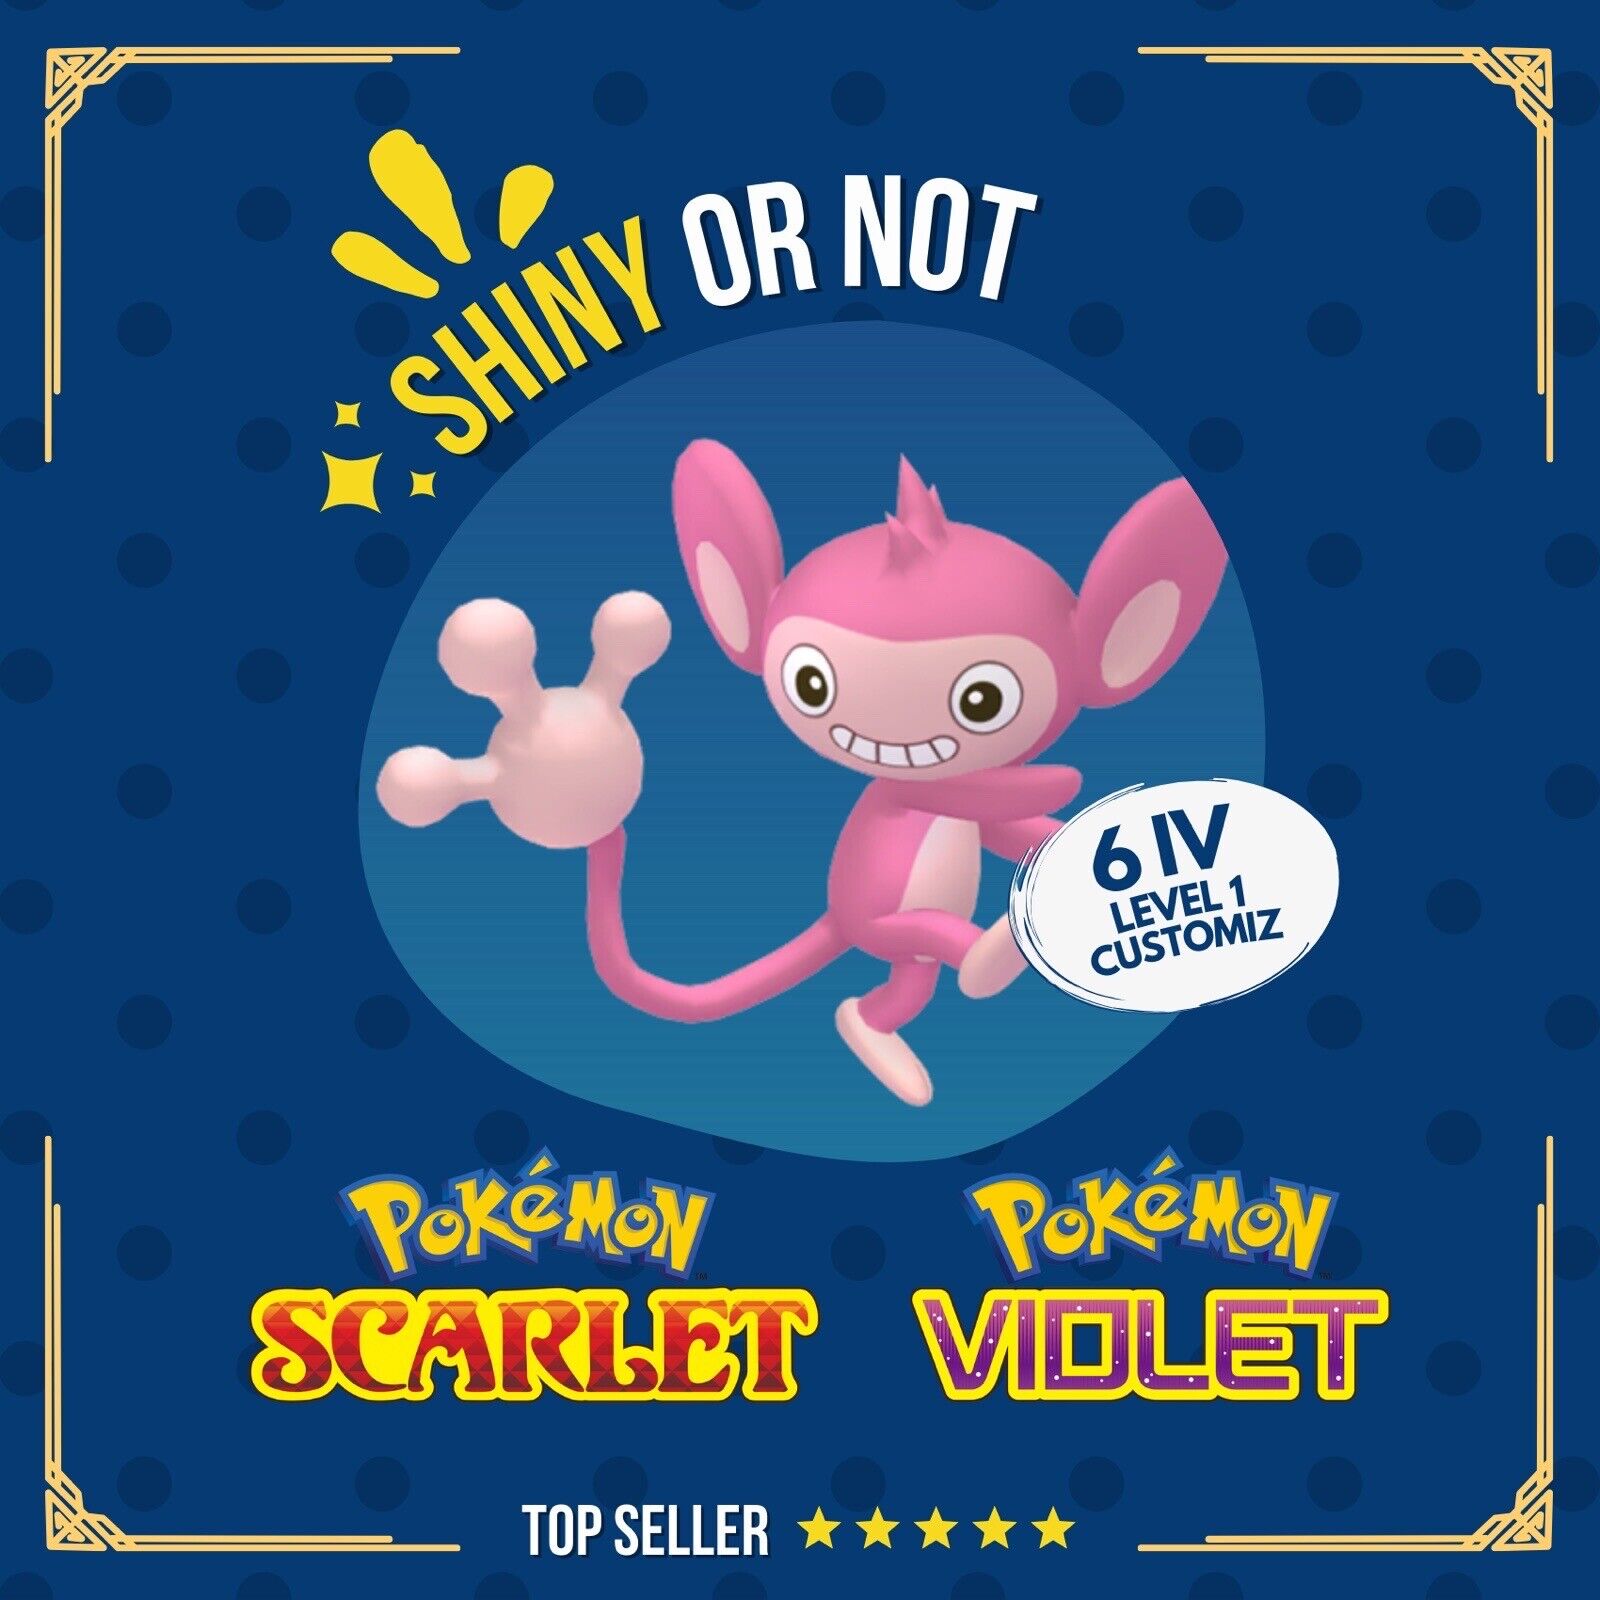 Aipom Shiny or Non ✨ 6 IV Customizable Nature Level OT Pokémon Scarlet Violet by Shiny Living Dex | Shiny Living Dex